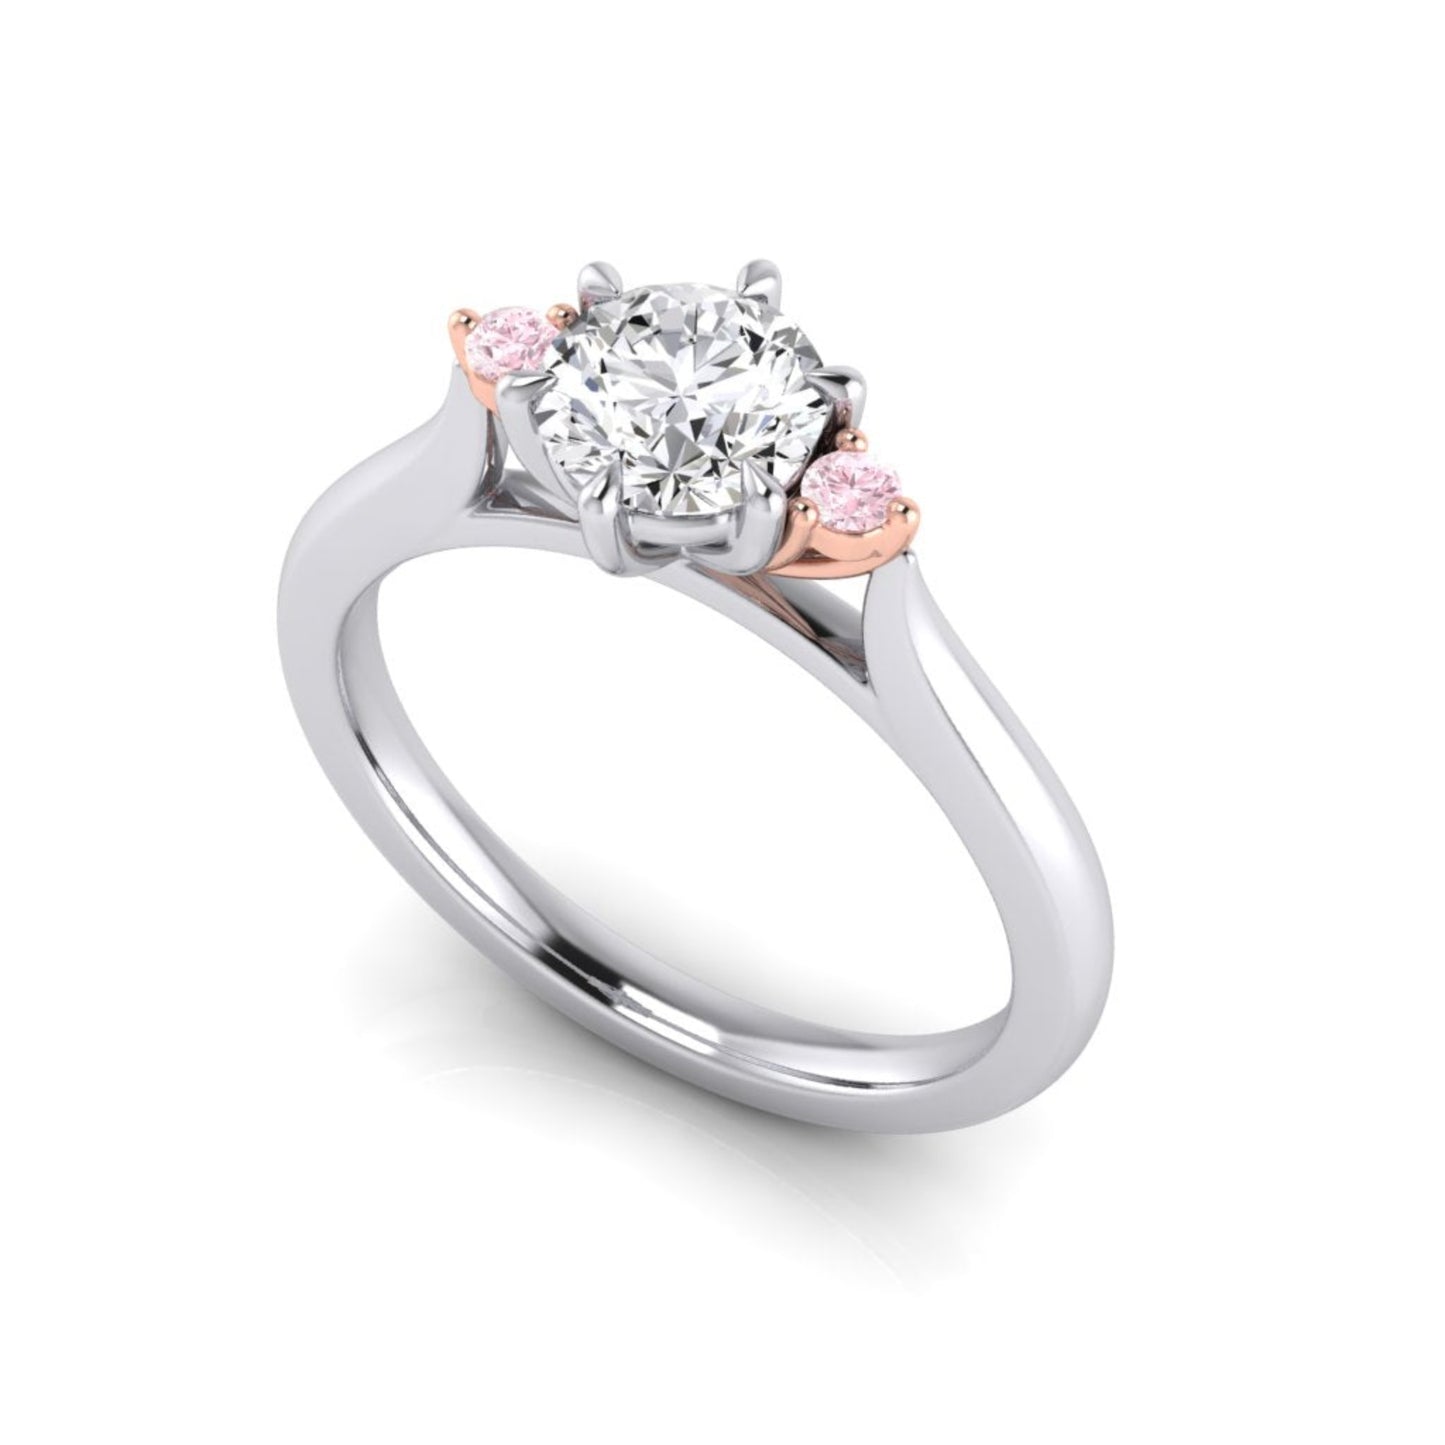 Heidi Pink Diamond Trilogy Ring